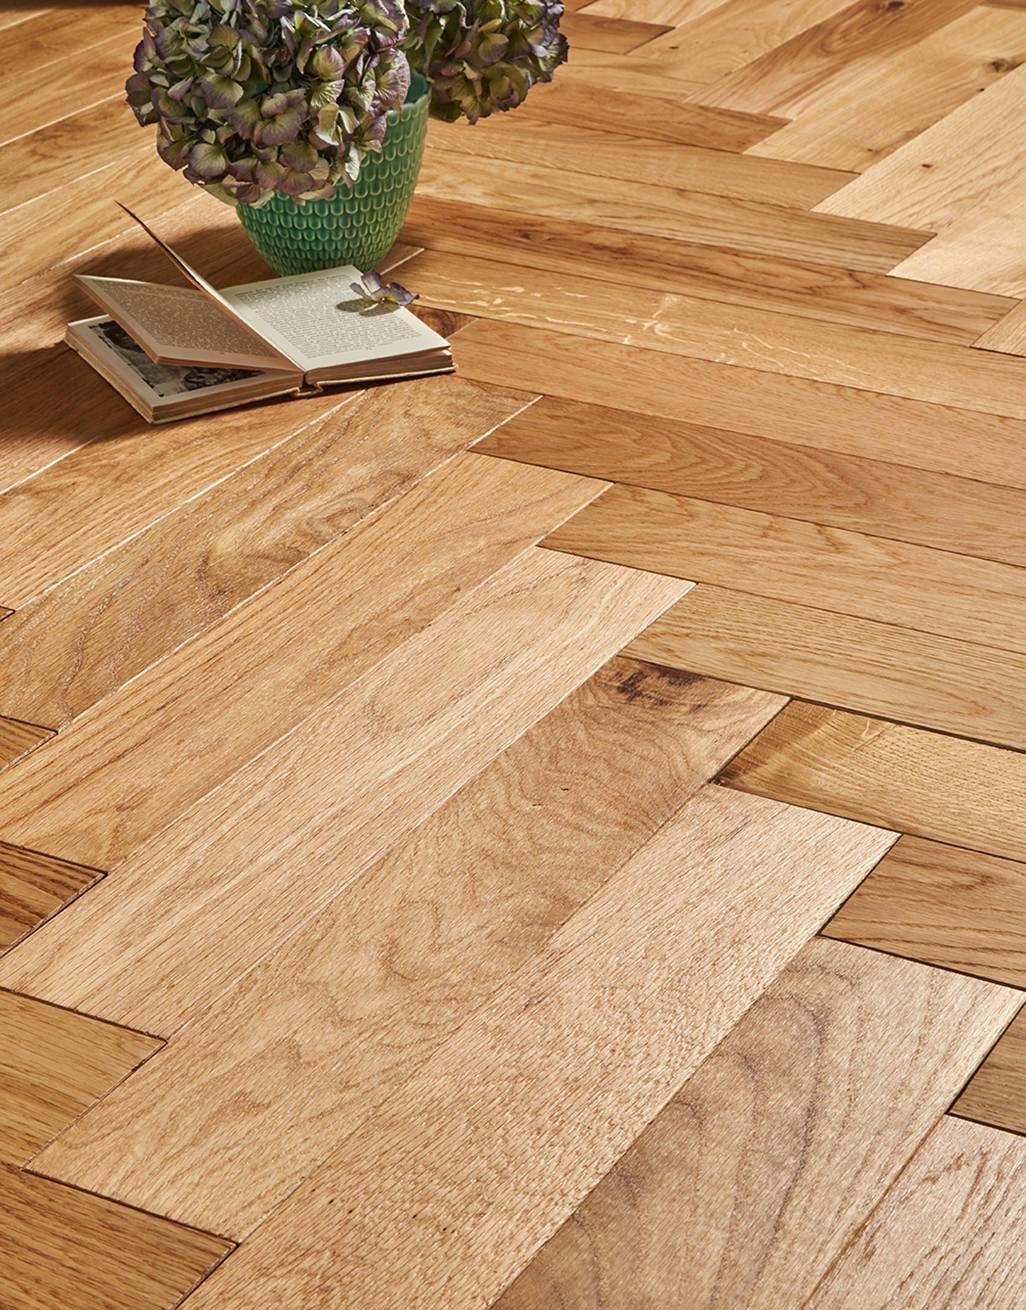 Trade Select Natural Oiled Herringbone Parquet Oak Solid Wood Flooring 2